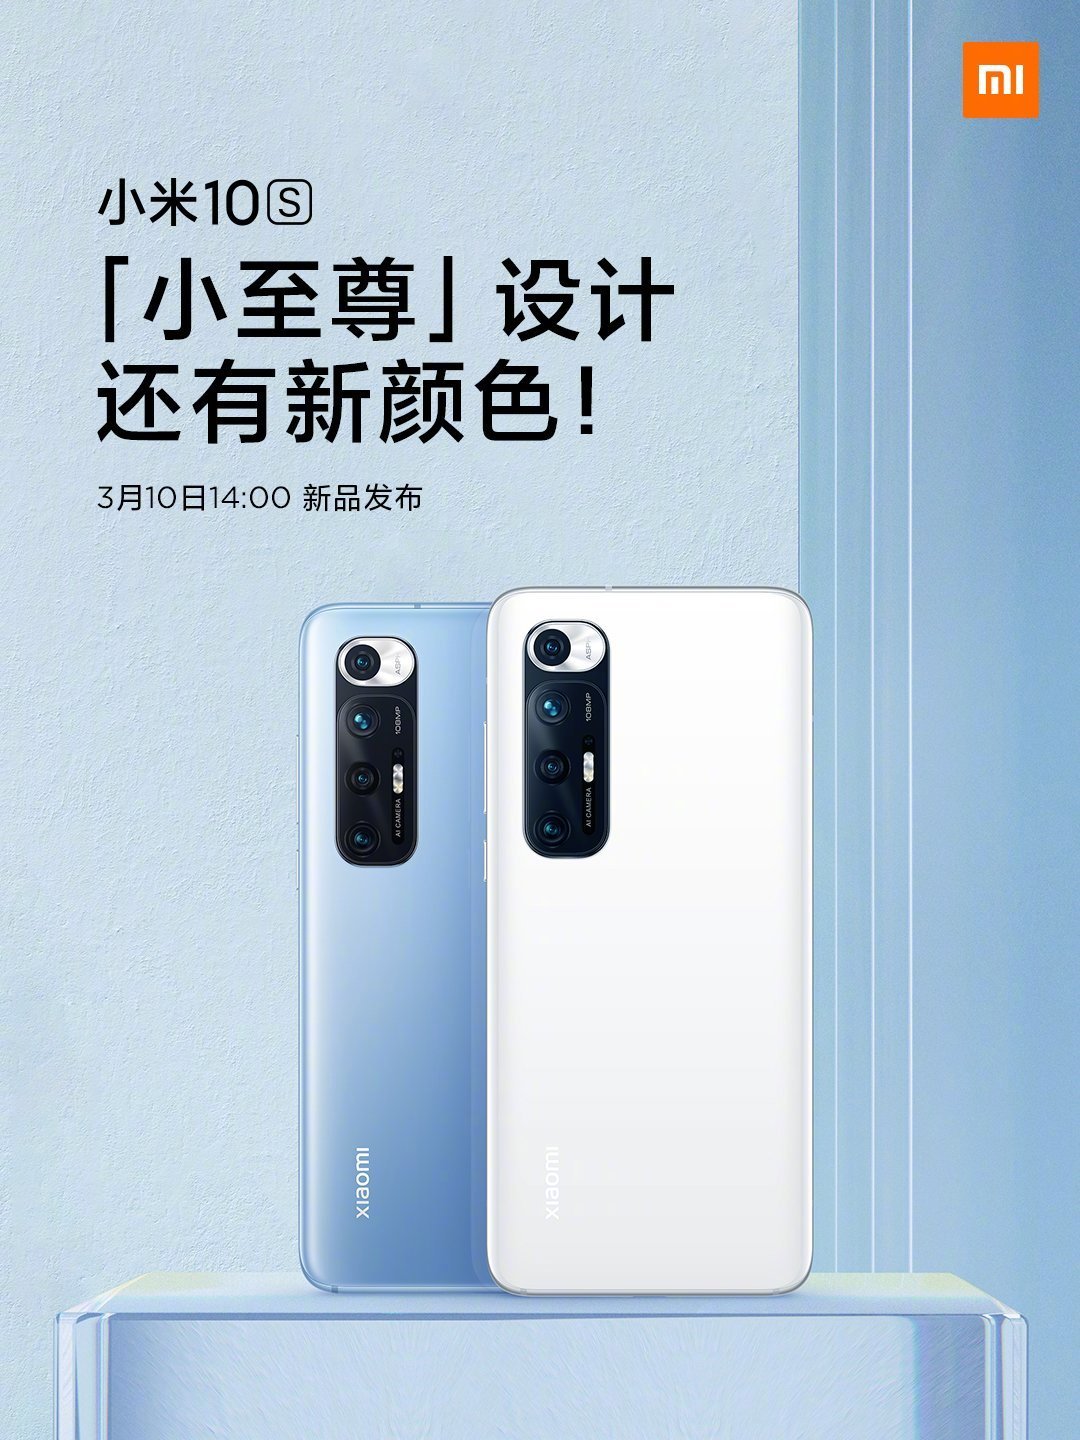 10S Xiaomi mi launch date poster-